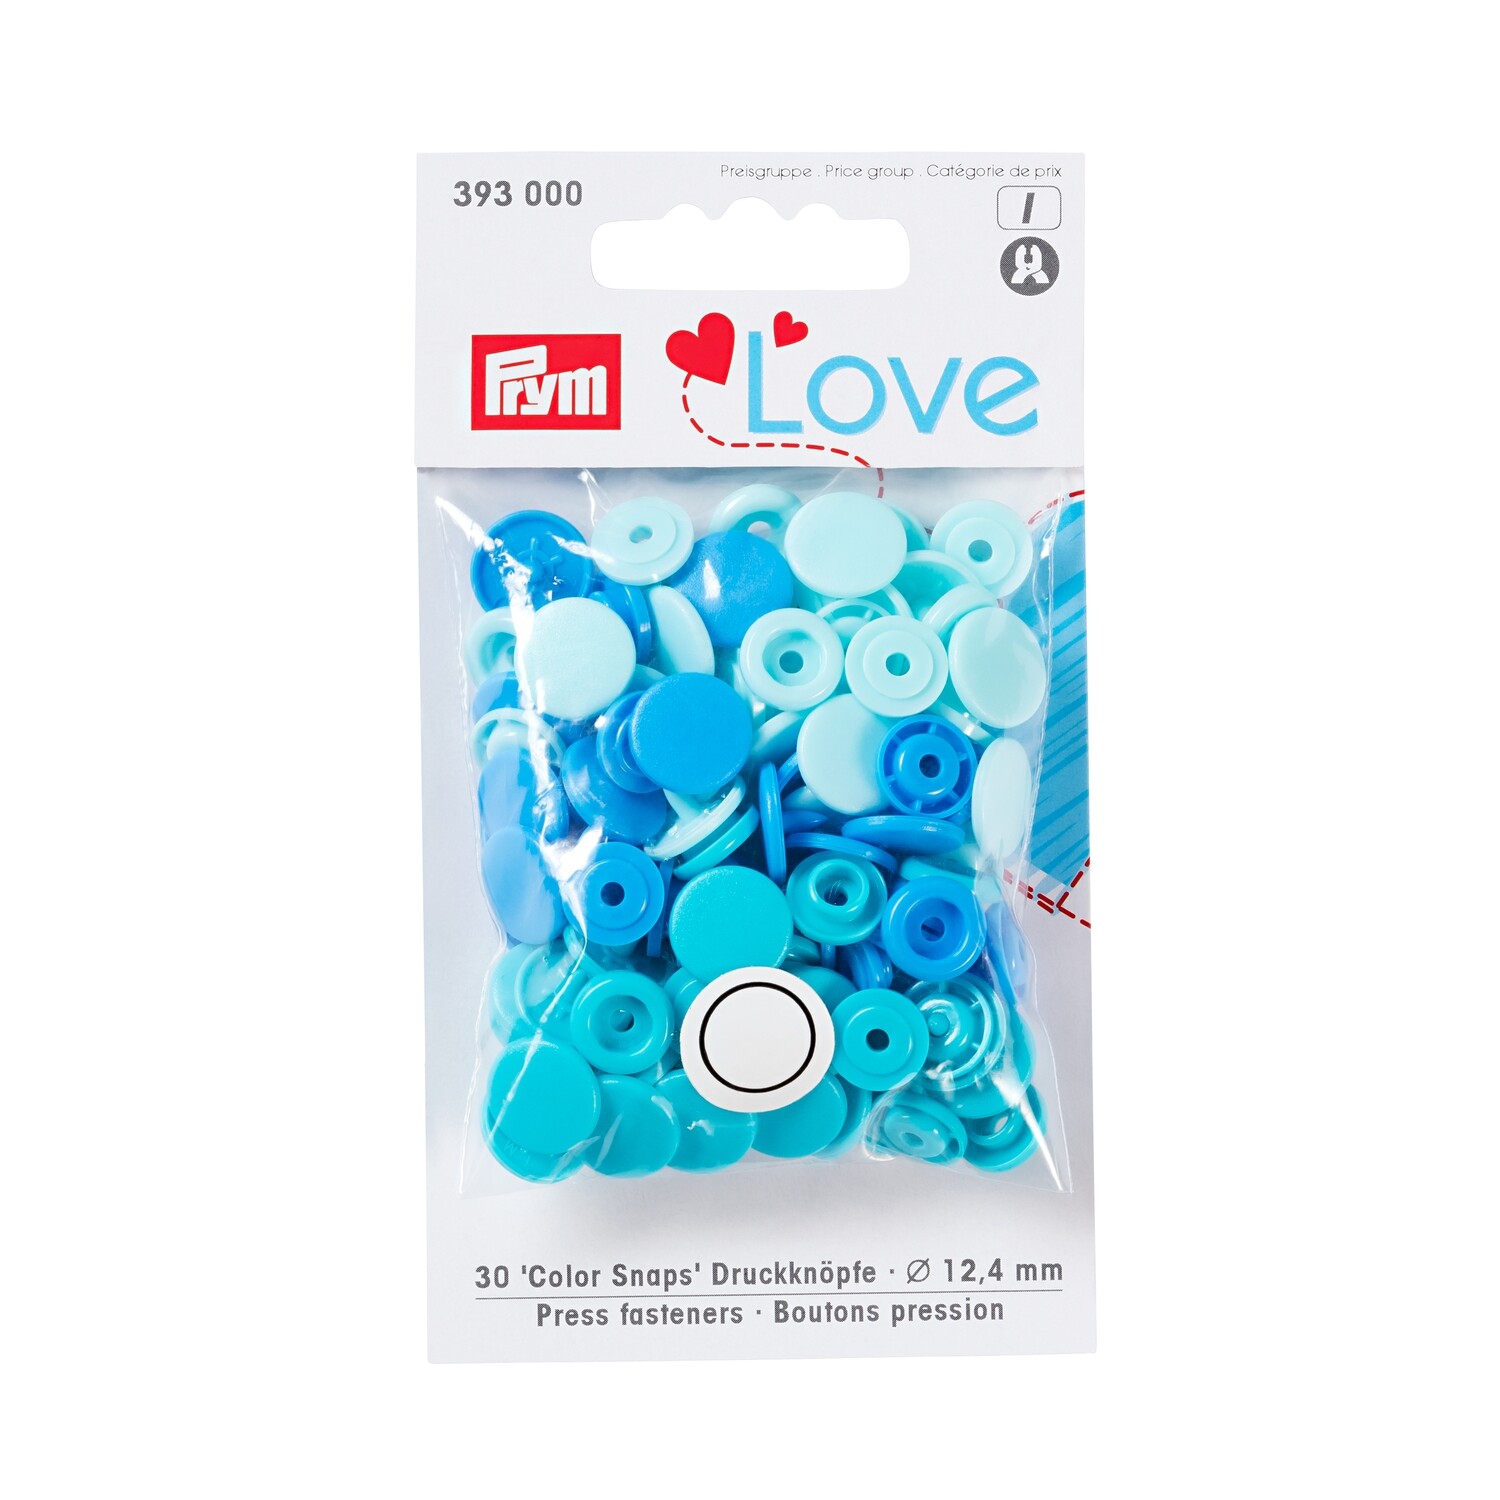 Prym Love nittryckknappar 12,4 mm - 30 st - turkos/blå